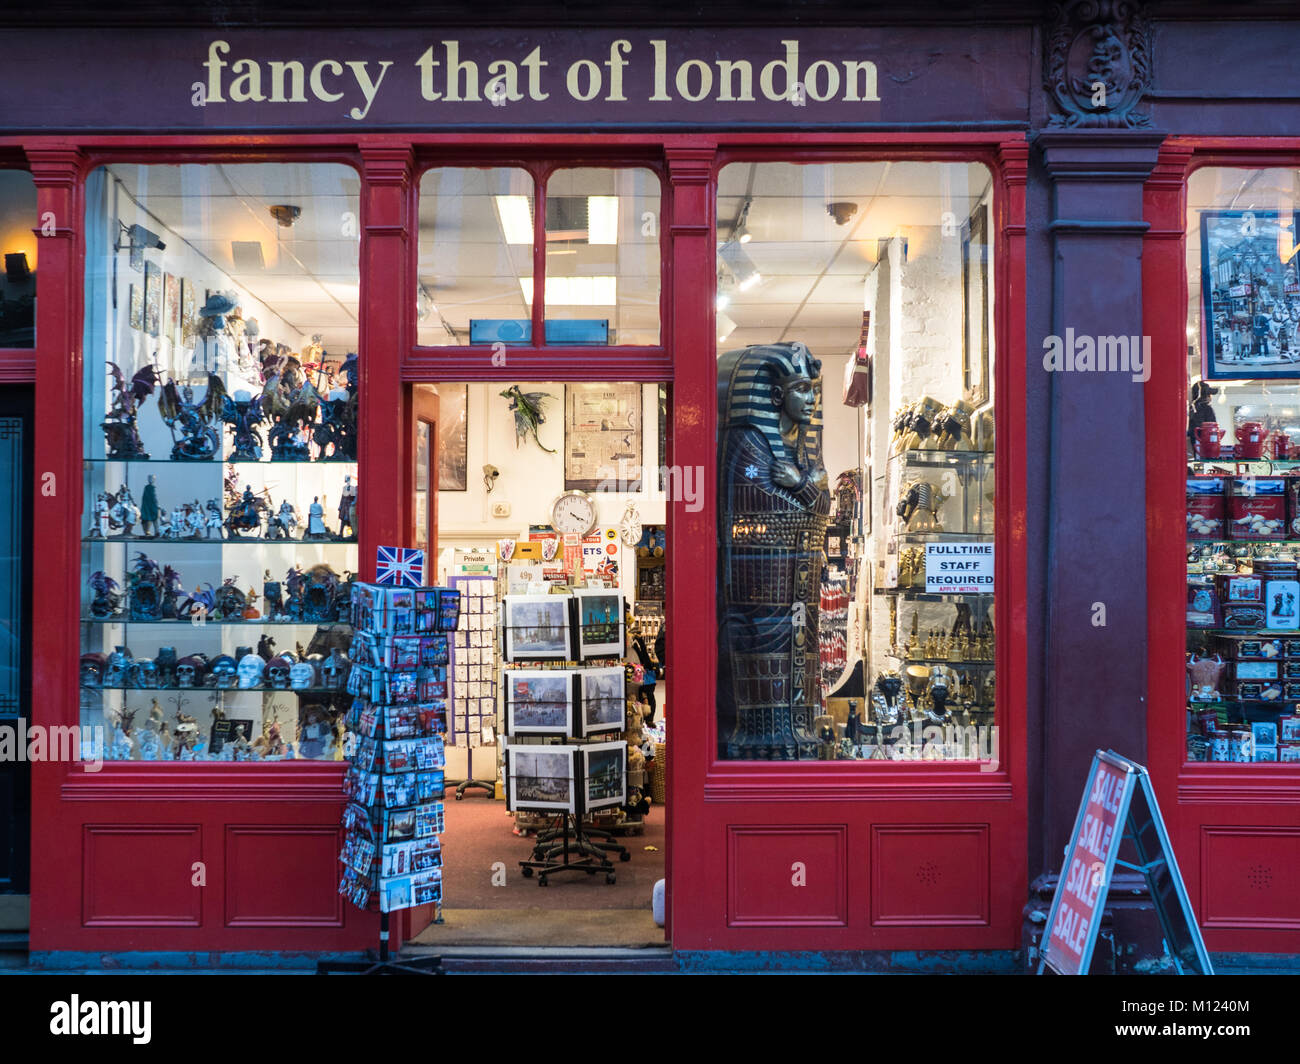 London Souvenir Shop - Fancy, der London touristische Souvenir Shop in der Nähe des British Museum in Bloomsbury, London. Stockfoto